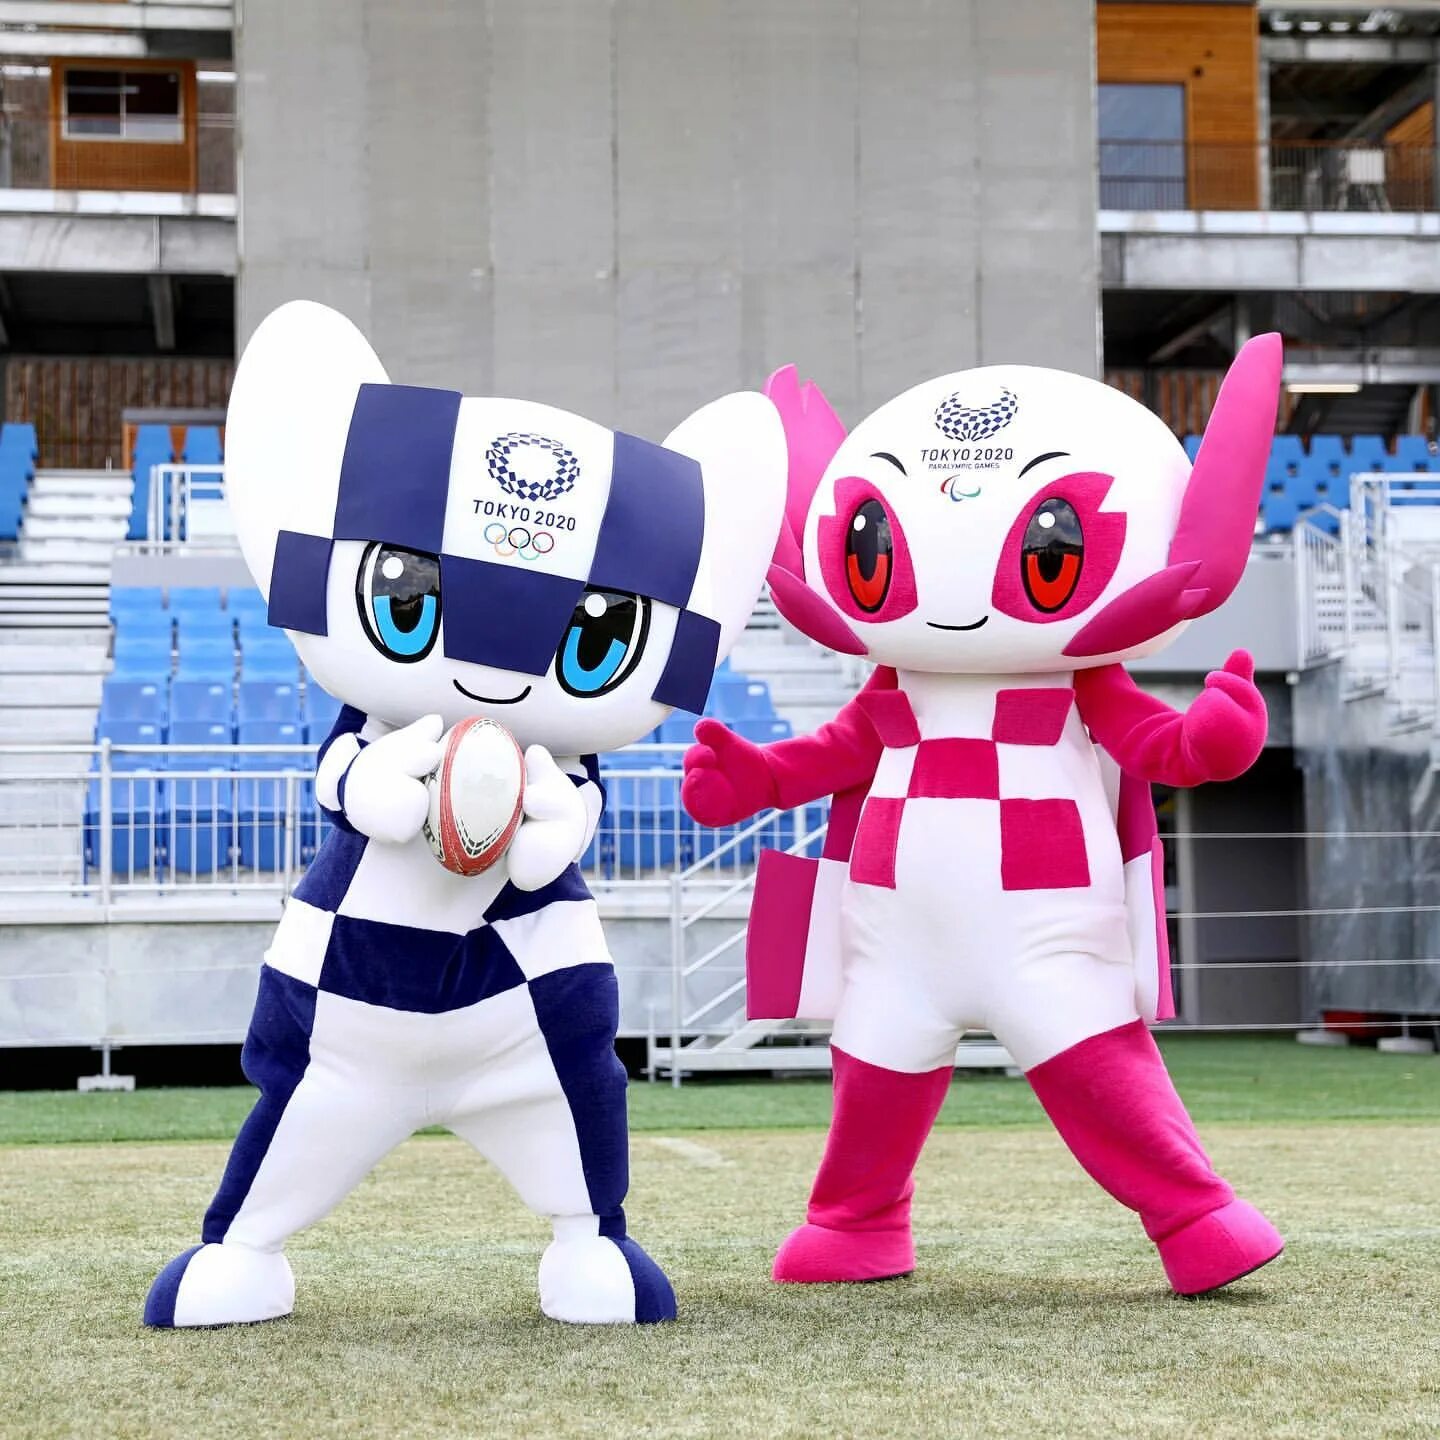 Задача на олимпийских играх в токио. 32 Олимпийские игры в Токио талисманы. Символы олимпиады в Токио.